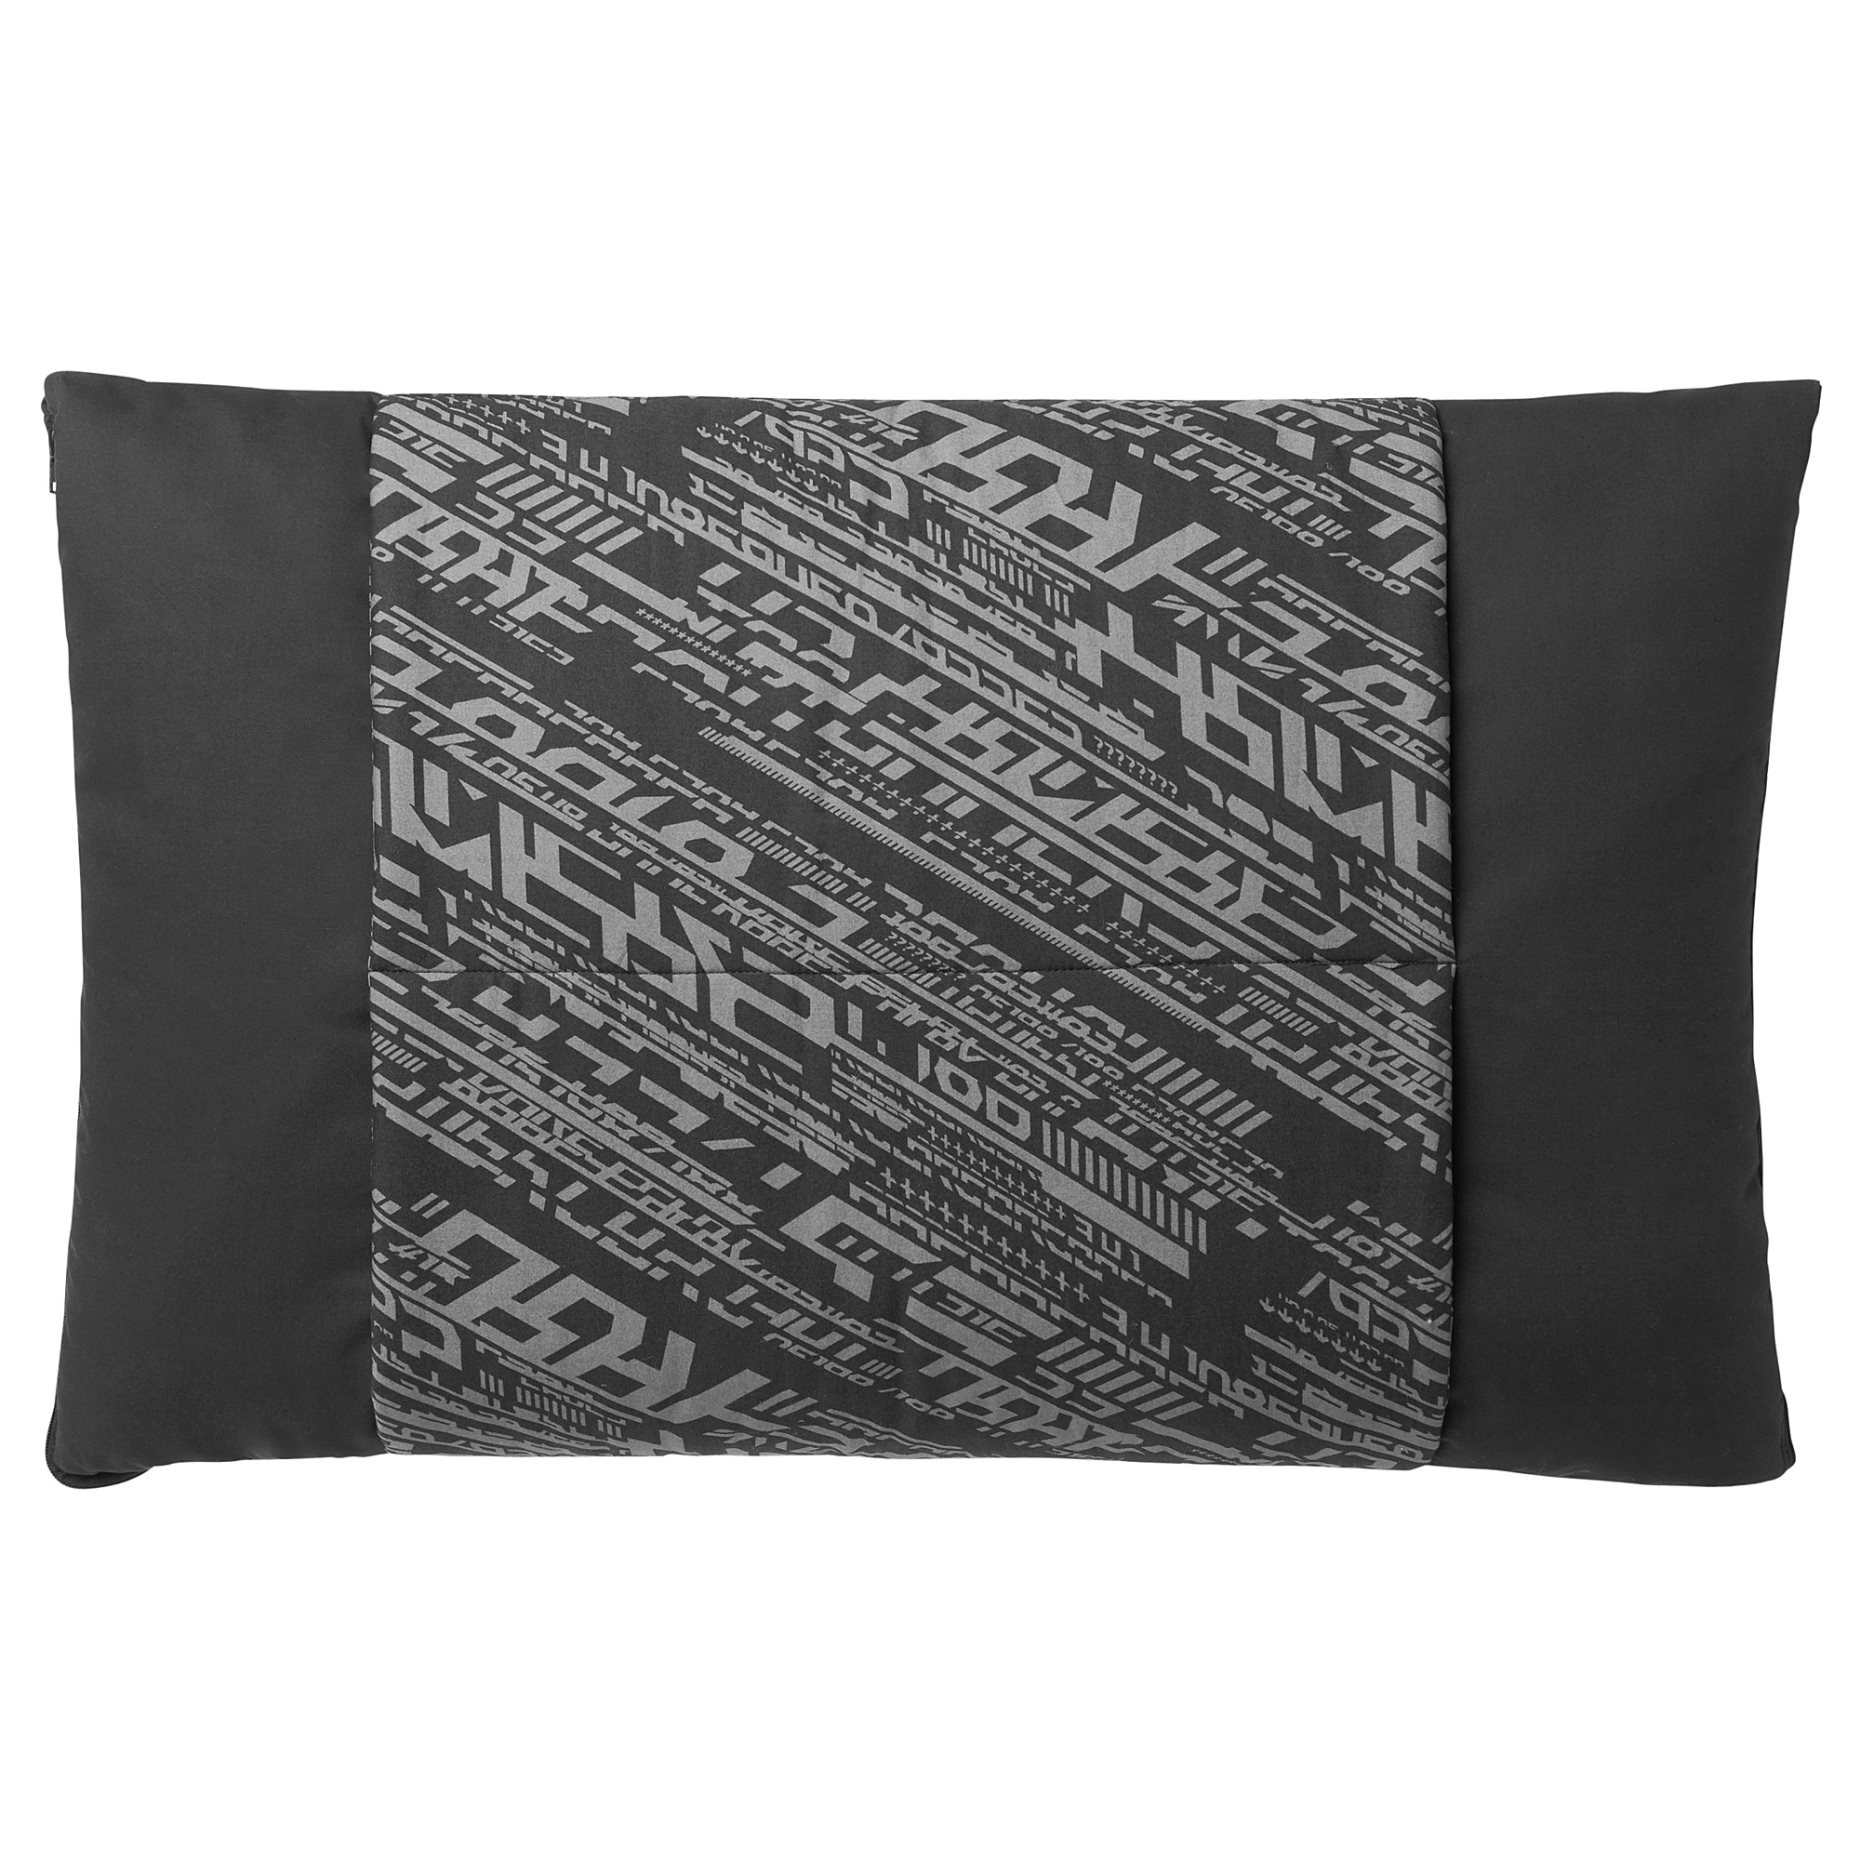 LÅNESPELARE, multi-functional cushion/blanket, 005.078.53